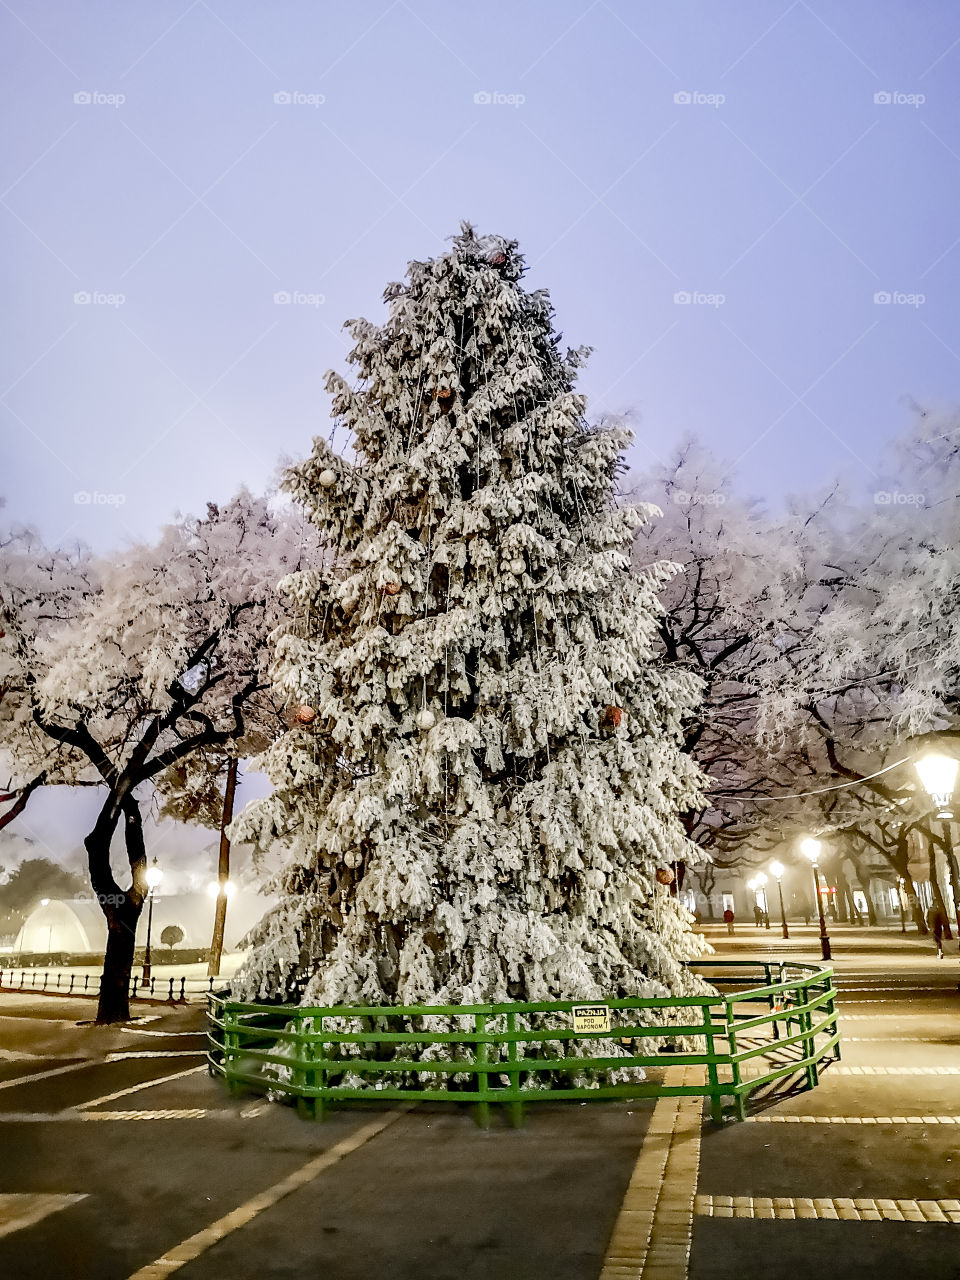 City Christmas tree